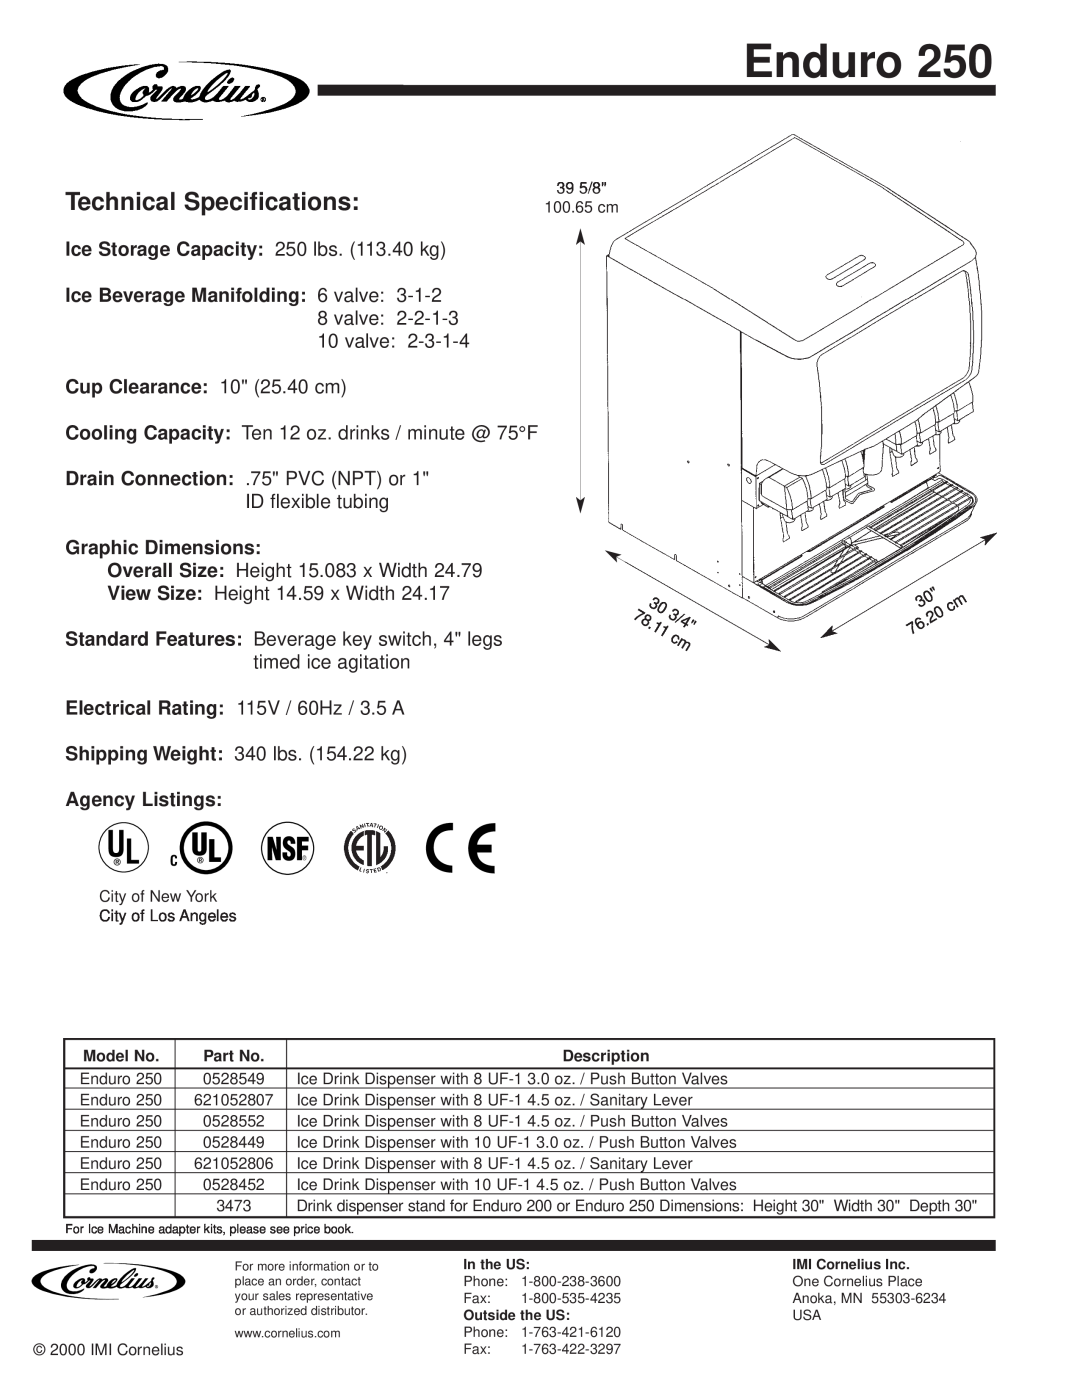 Cornelius Enduro 250 Technical Specifications, Drain Connection .75 PVC NPT or, ID flexible tubing, Model No, Description 